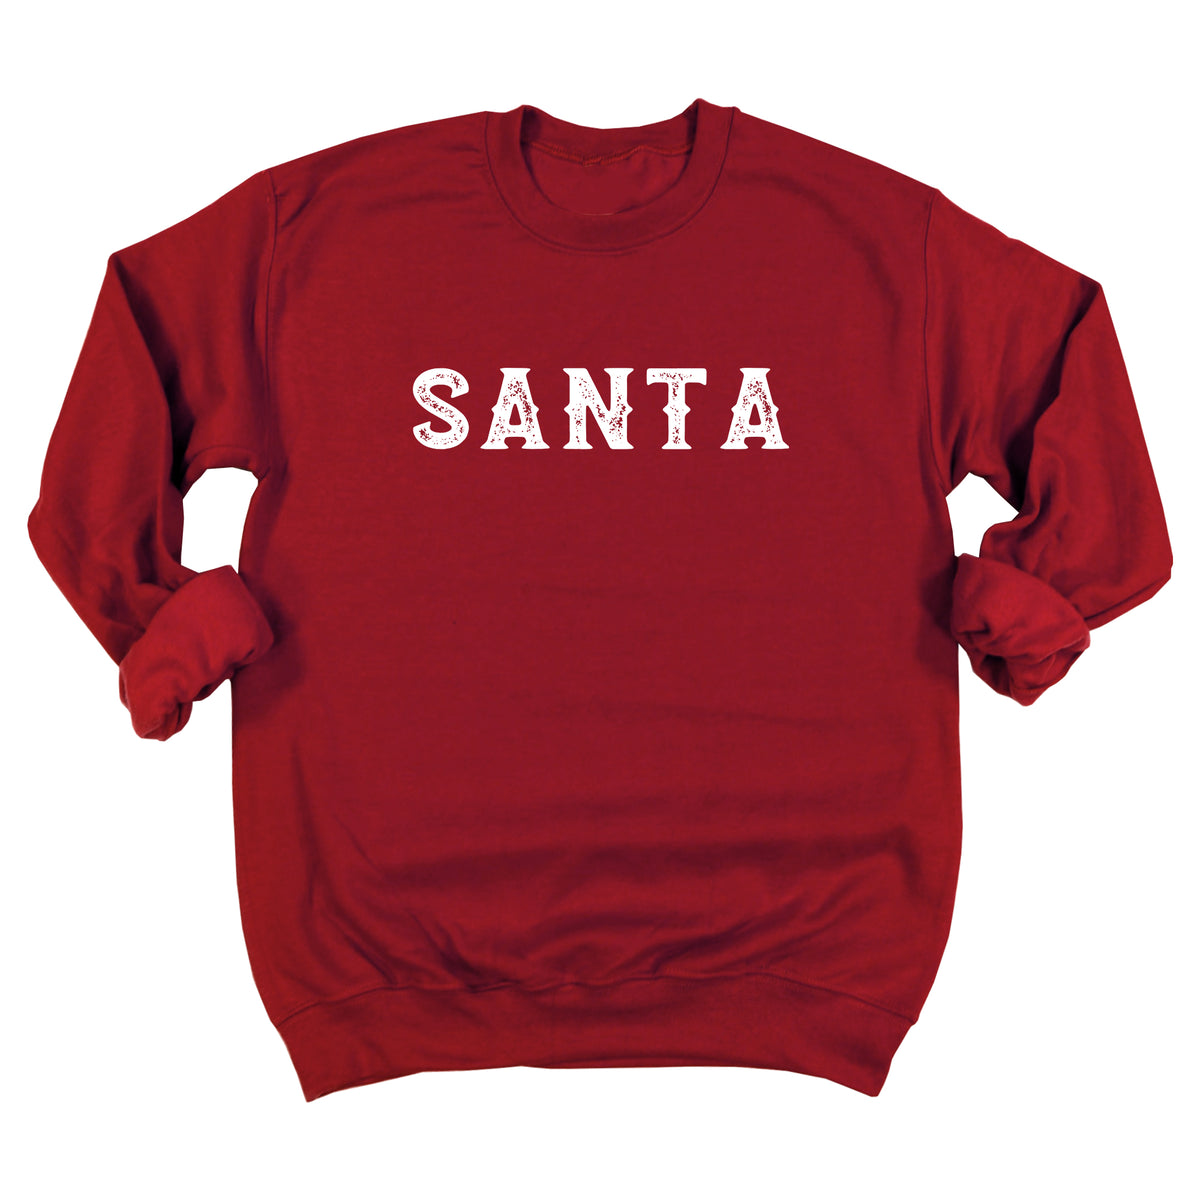 I Put Out for Santa / Santa Couples Sweatshirt